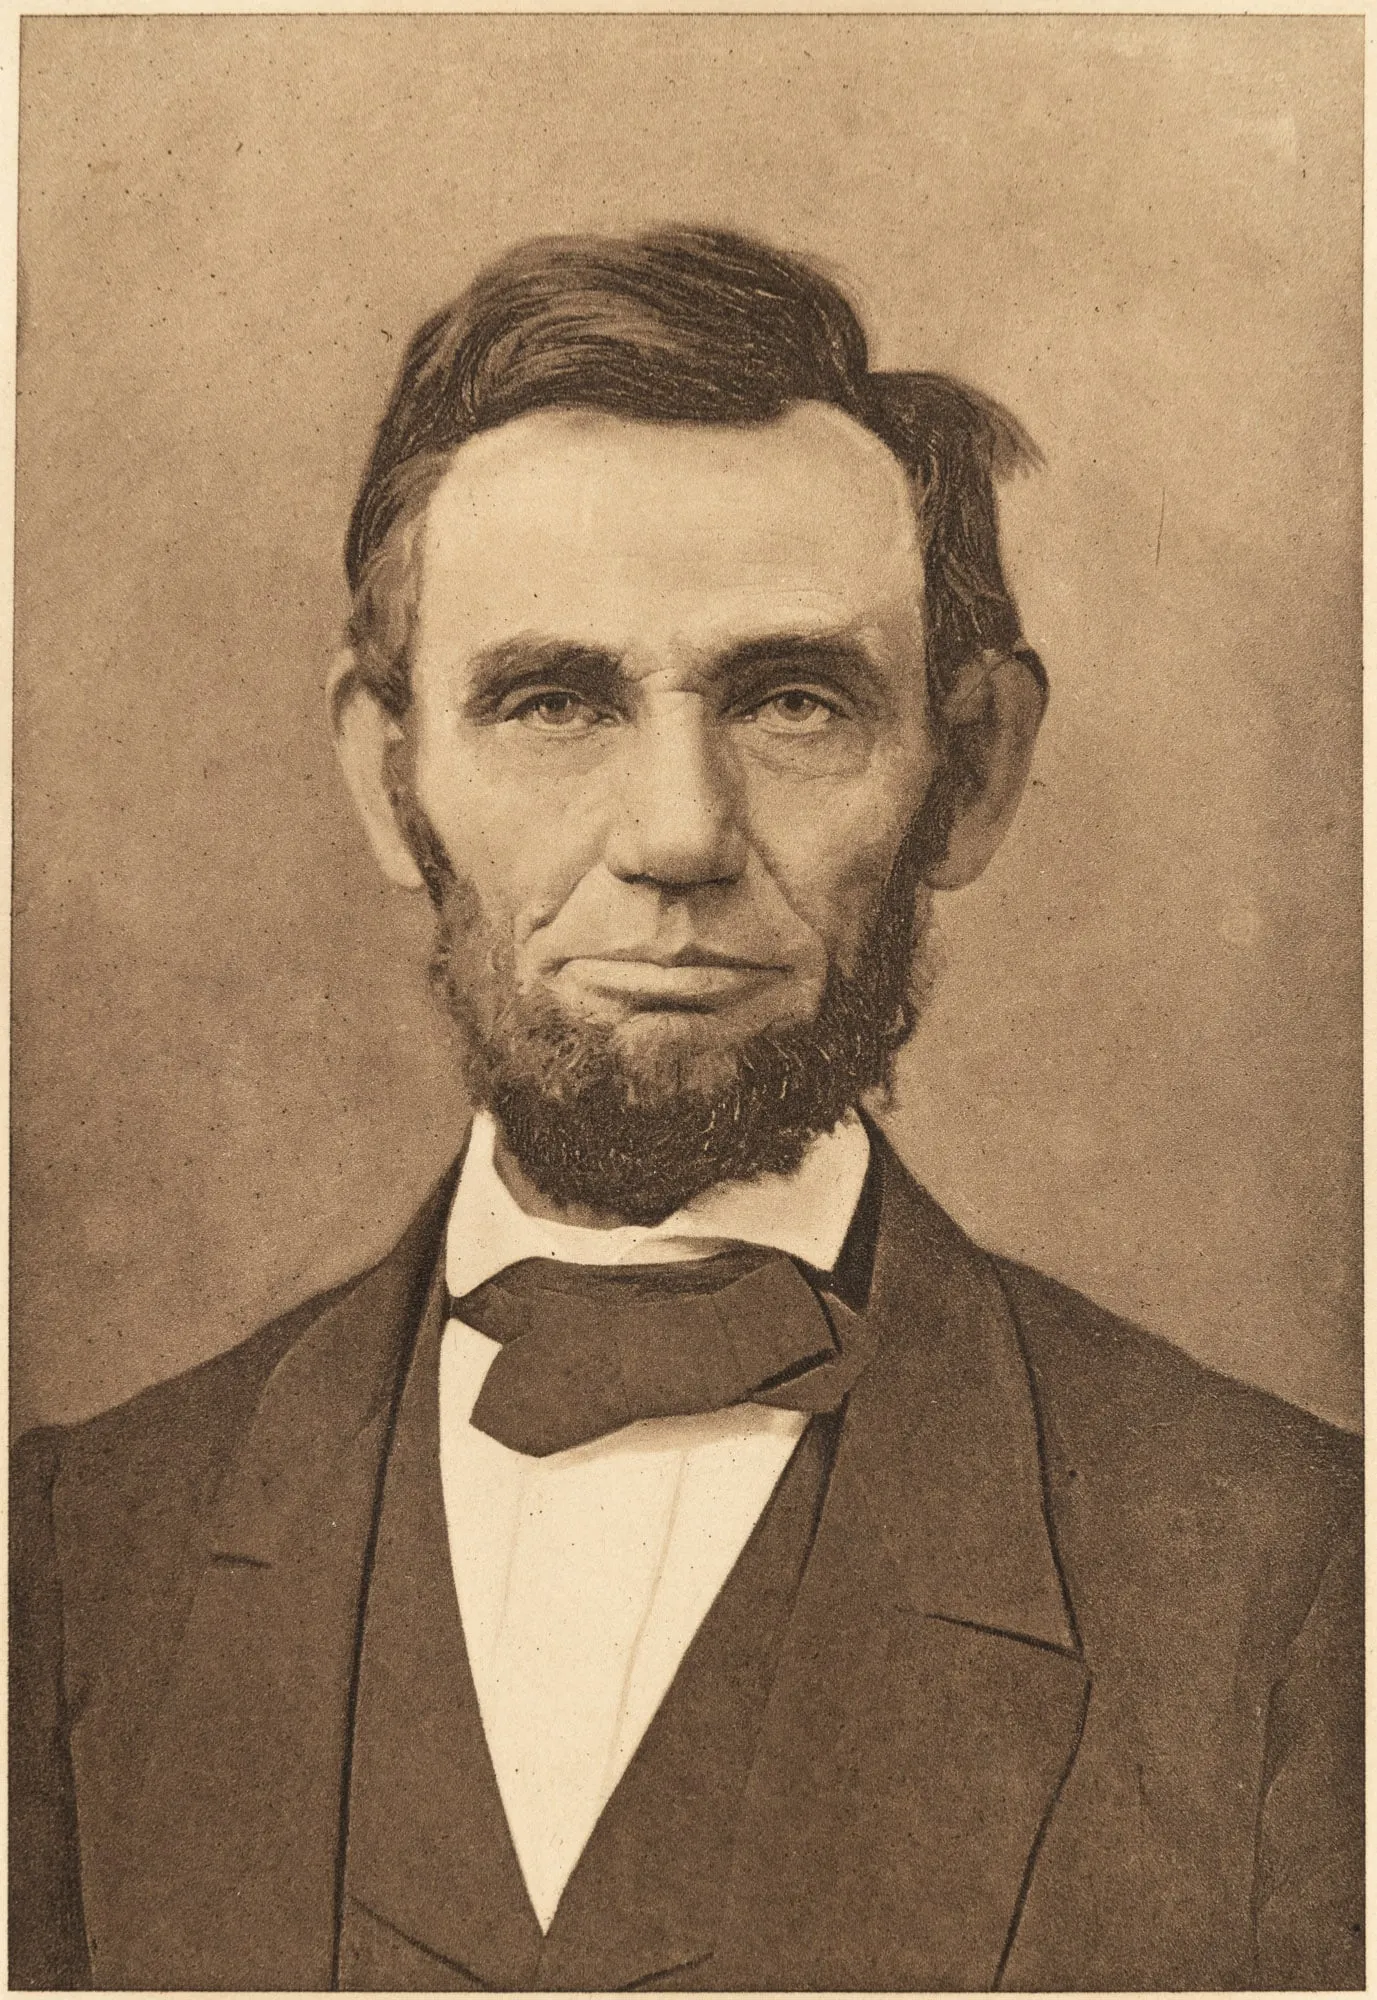 Alexander Gardner, Abraham Lincoln 'Gettysburg Portrait' from 1863, estimated at $1,000-$1,500 at PBA Galleries.